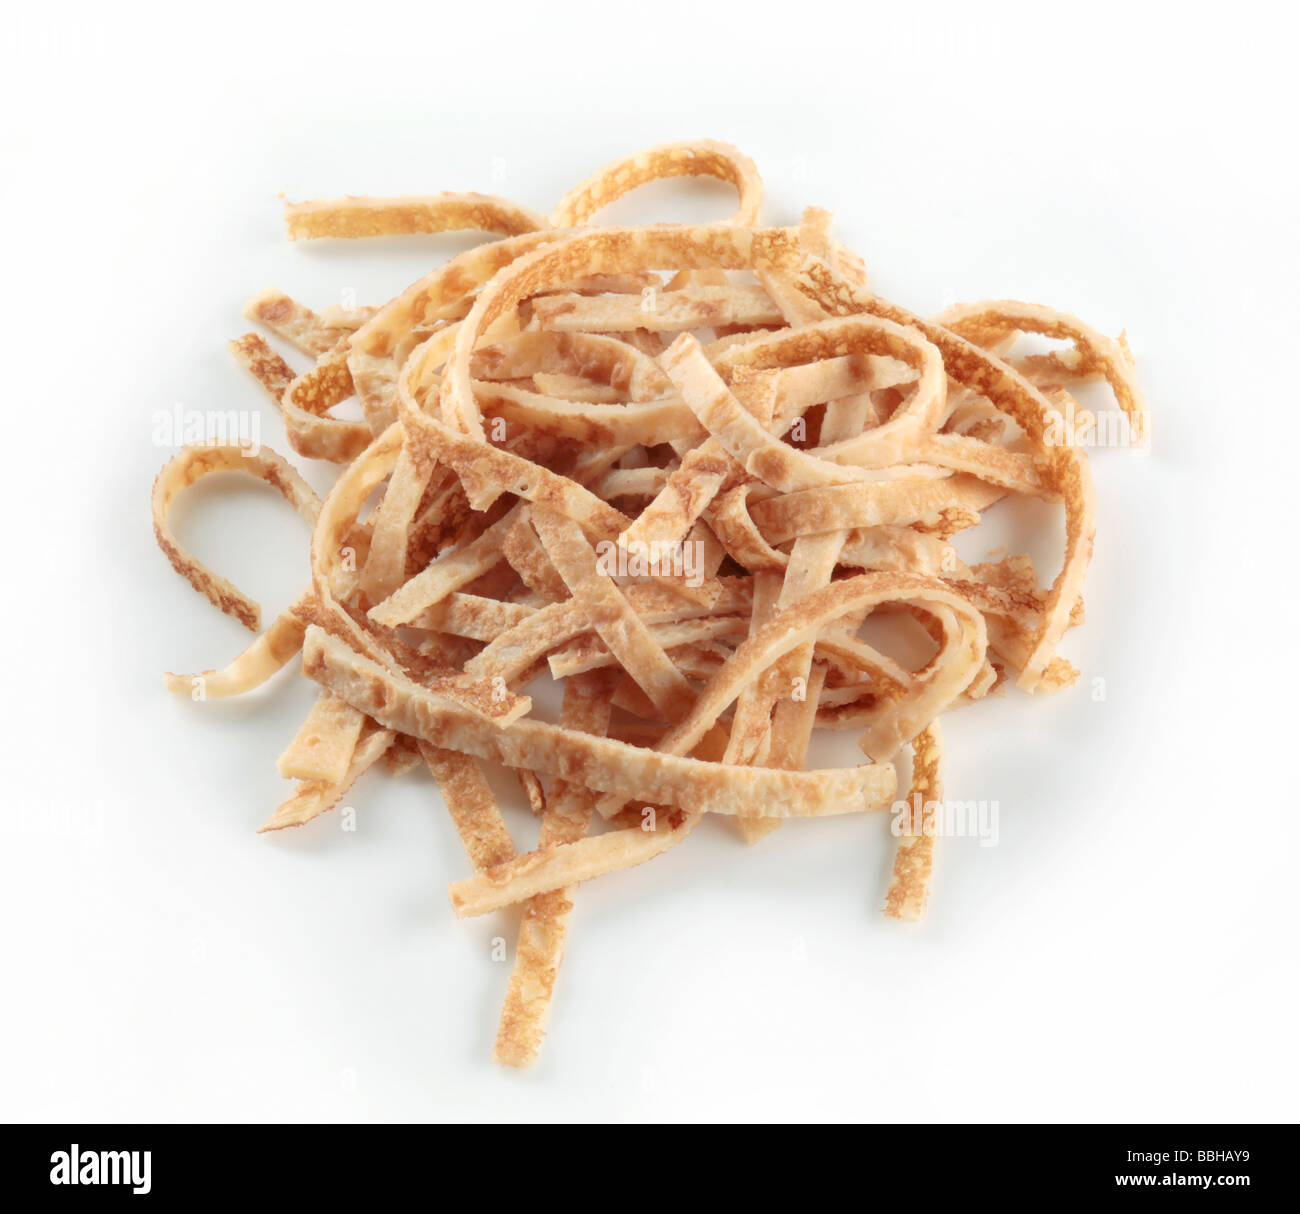 Celestine noodles - sliced pancakes Stock Photo